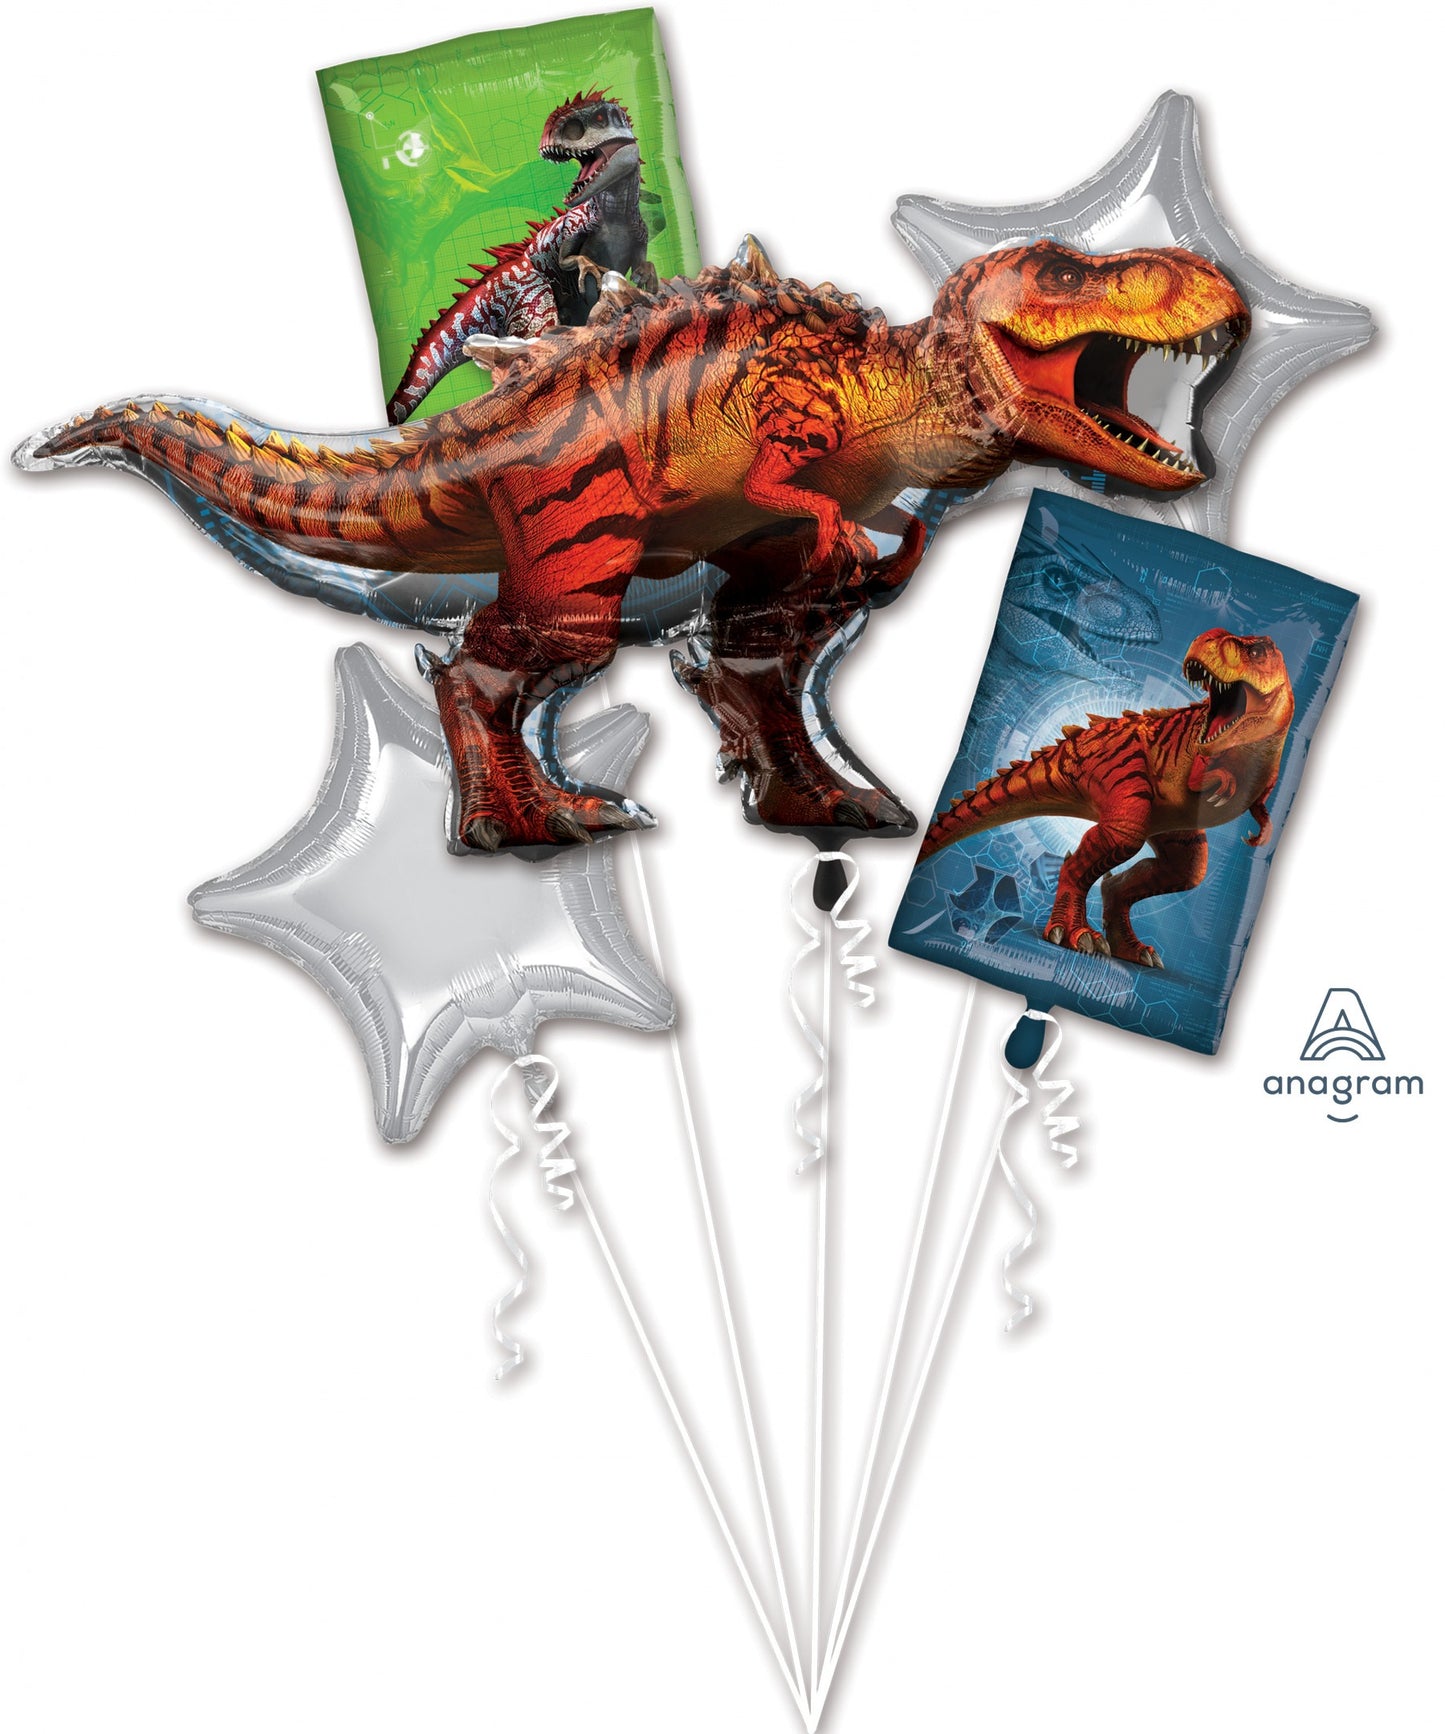 Jurassic World Bouquet - Let's Party! Event Decor & Party Supplies